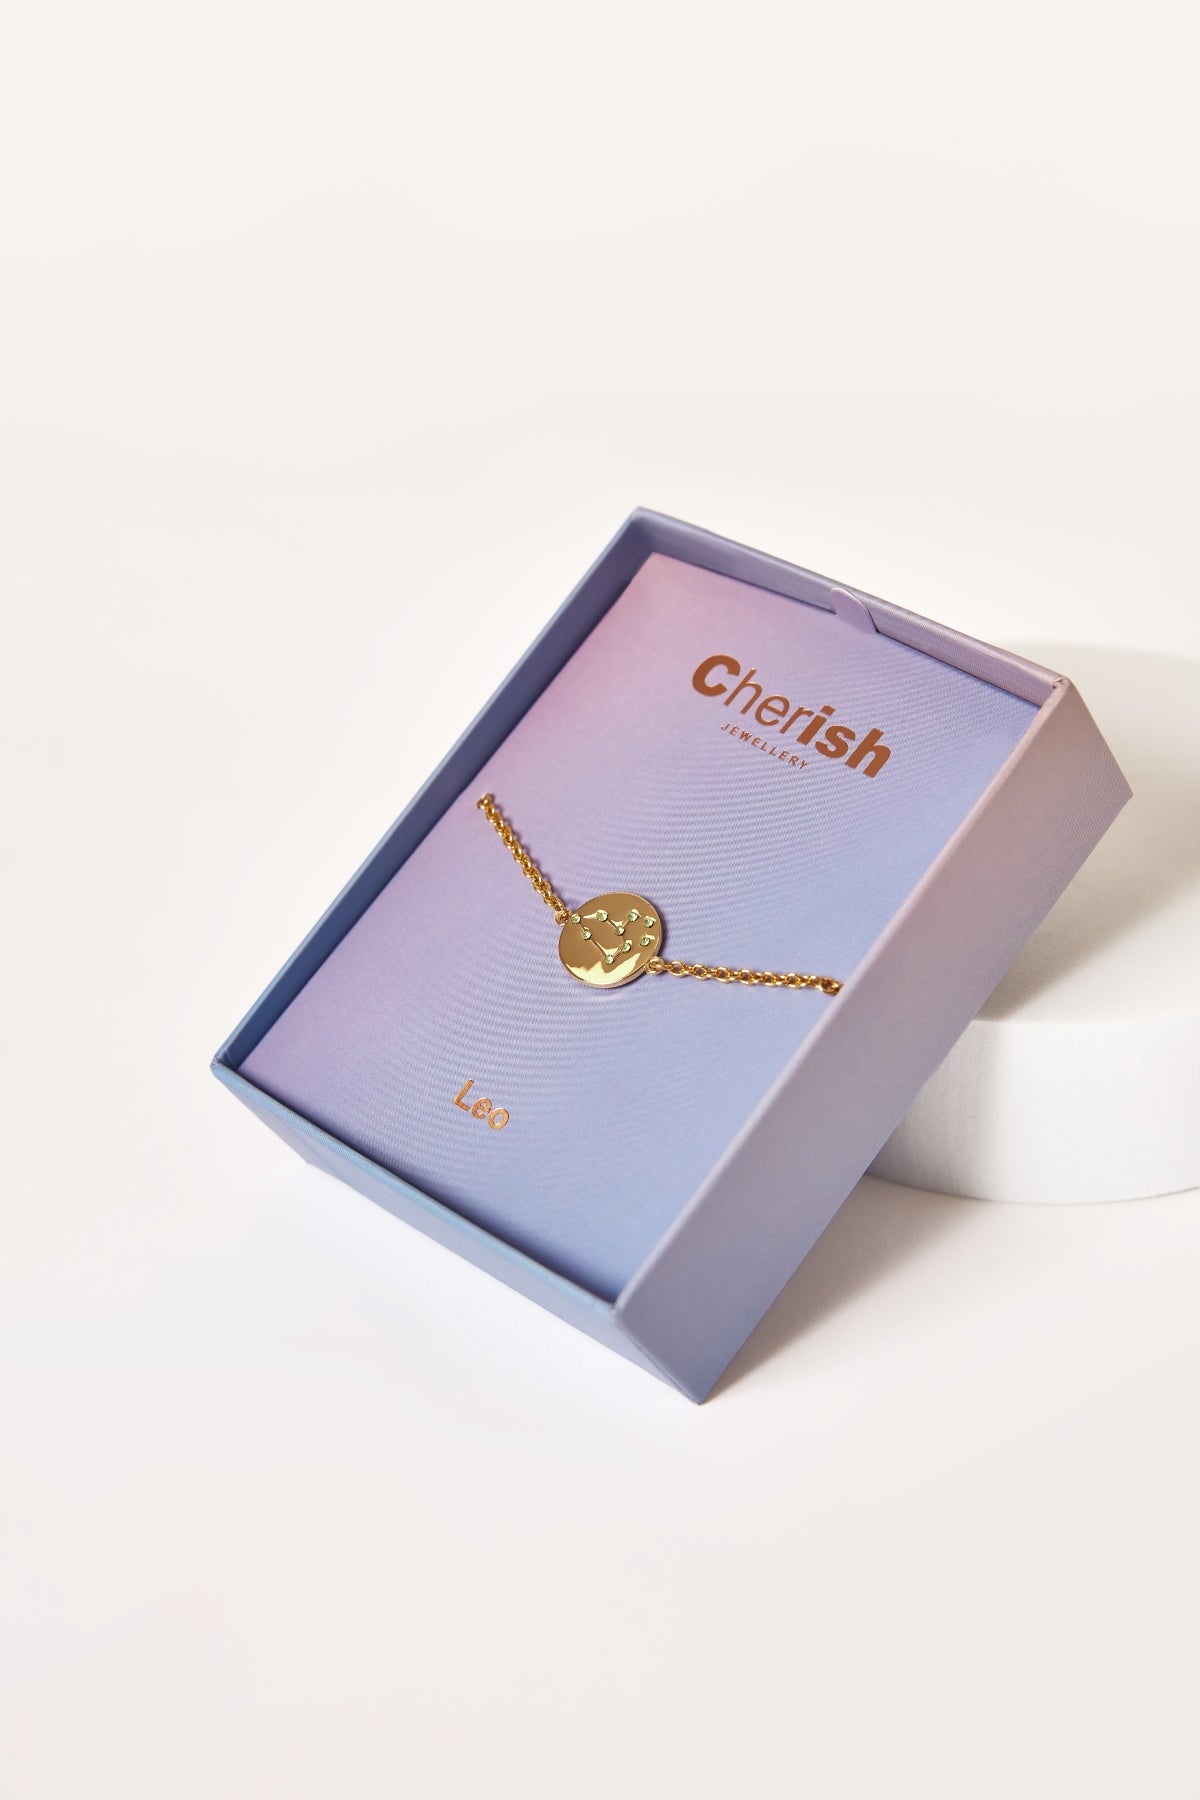 Leo's Regal Charm: Crystal Bracelet for Creativity & Confidence |  Brahmatells — BrahmatellsStore